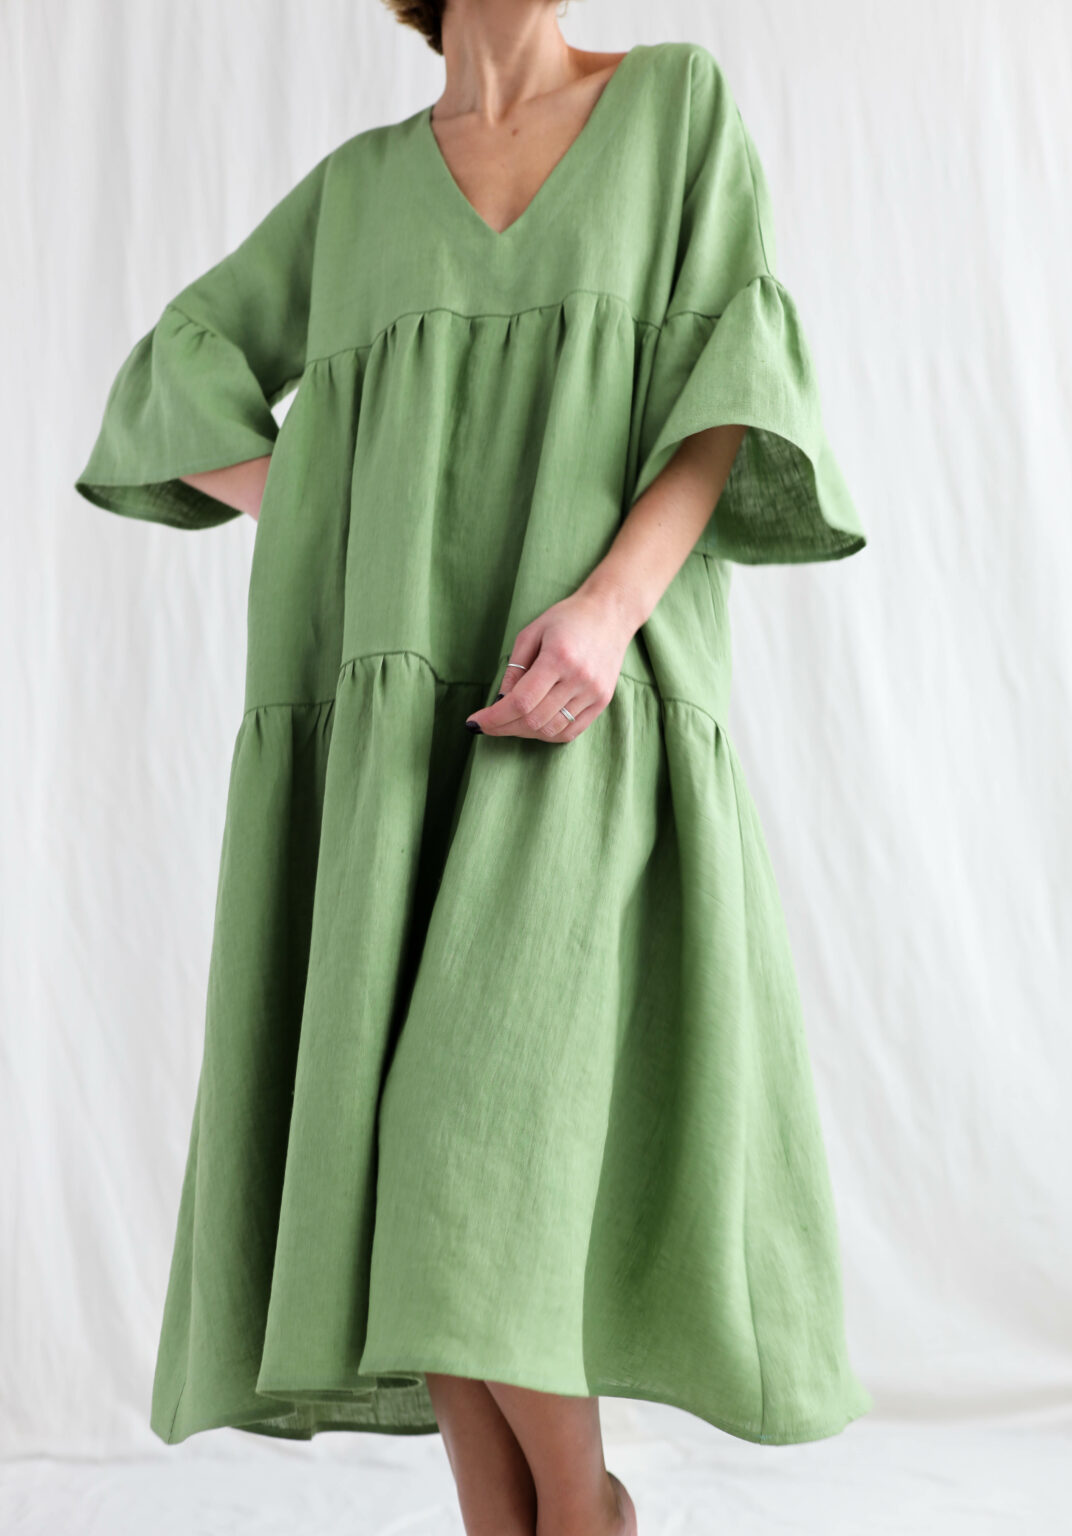 Foliage linen tiered dress ADELE – OffOn